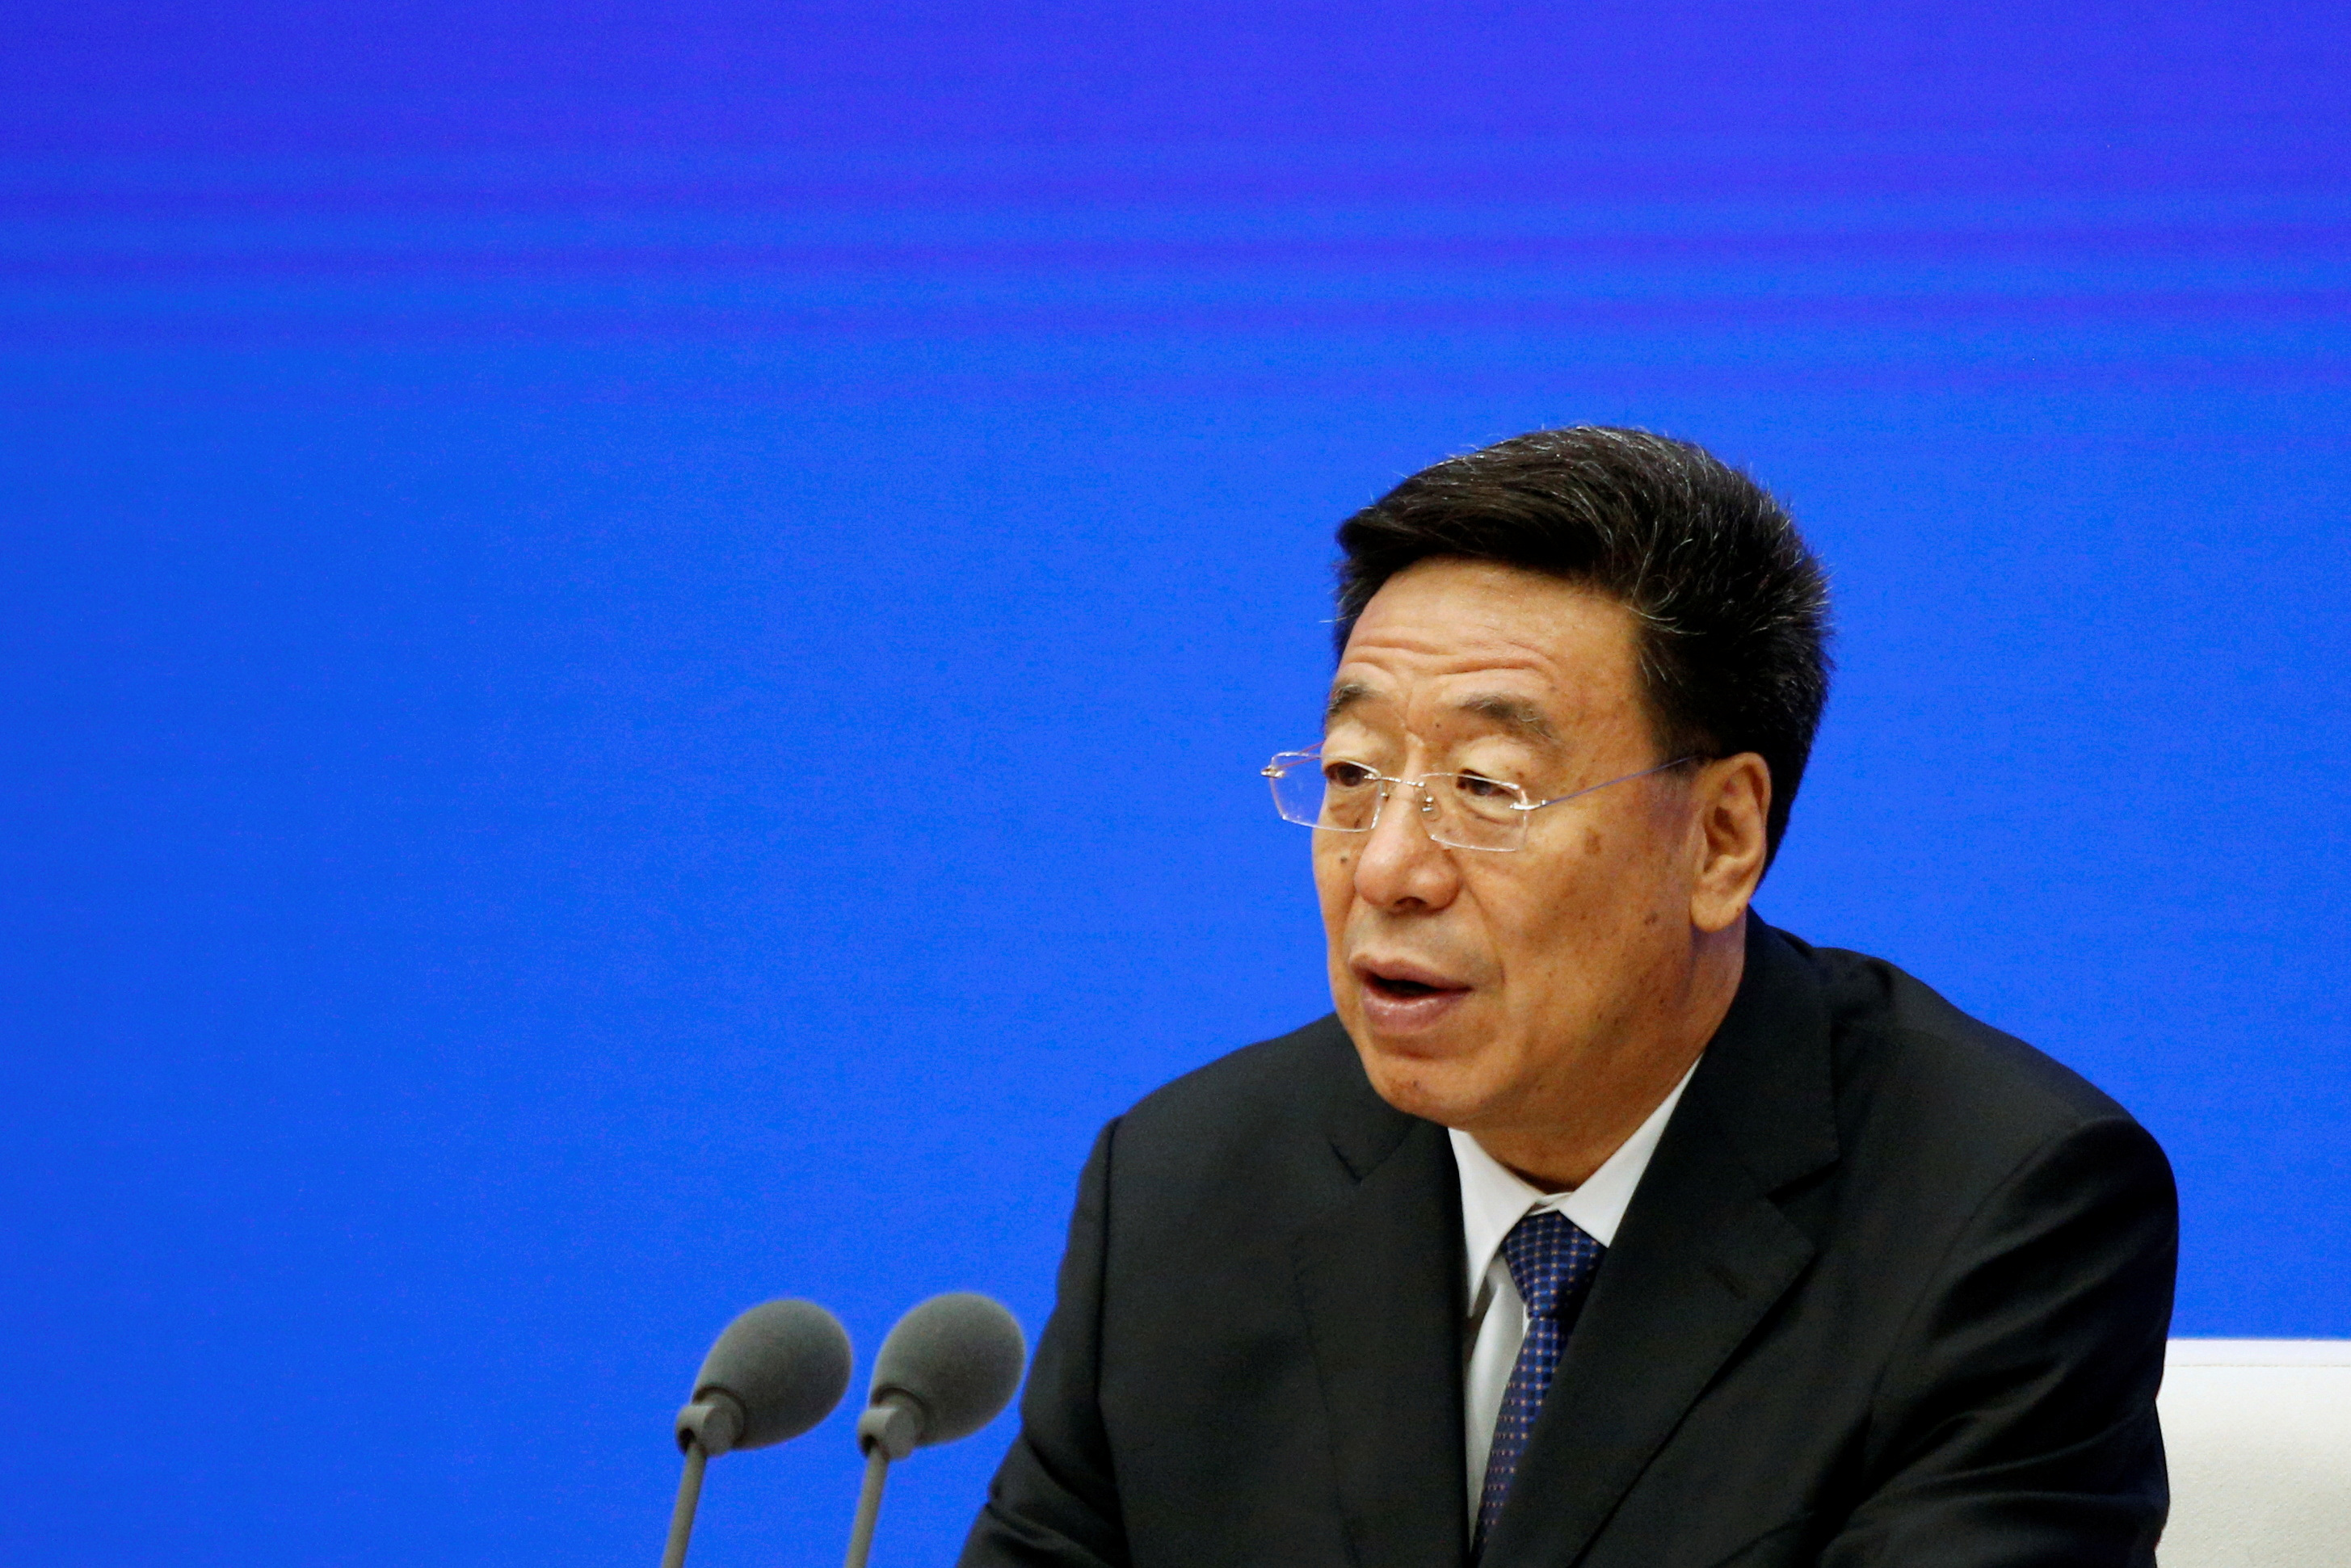 Wu Yingjie, party secretary of Tibet Autonomous Region, attends a news conference in Beijing